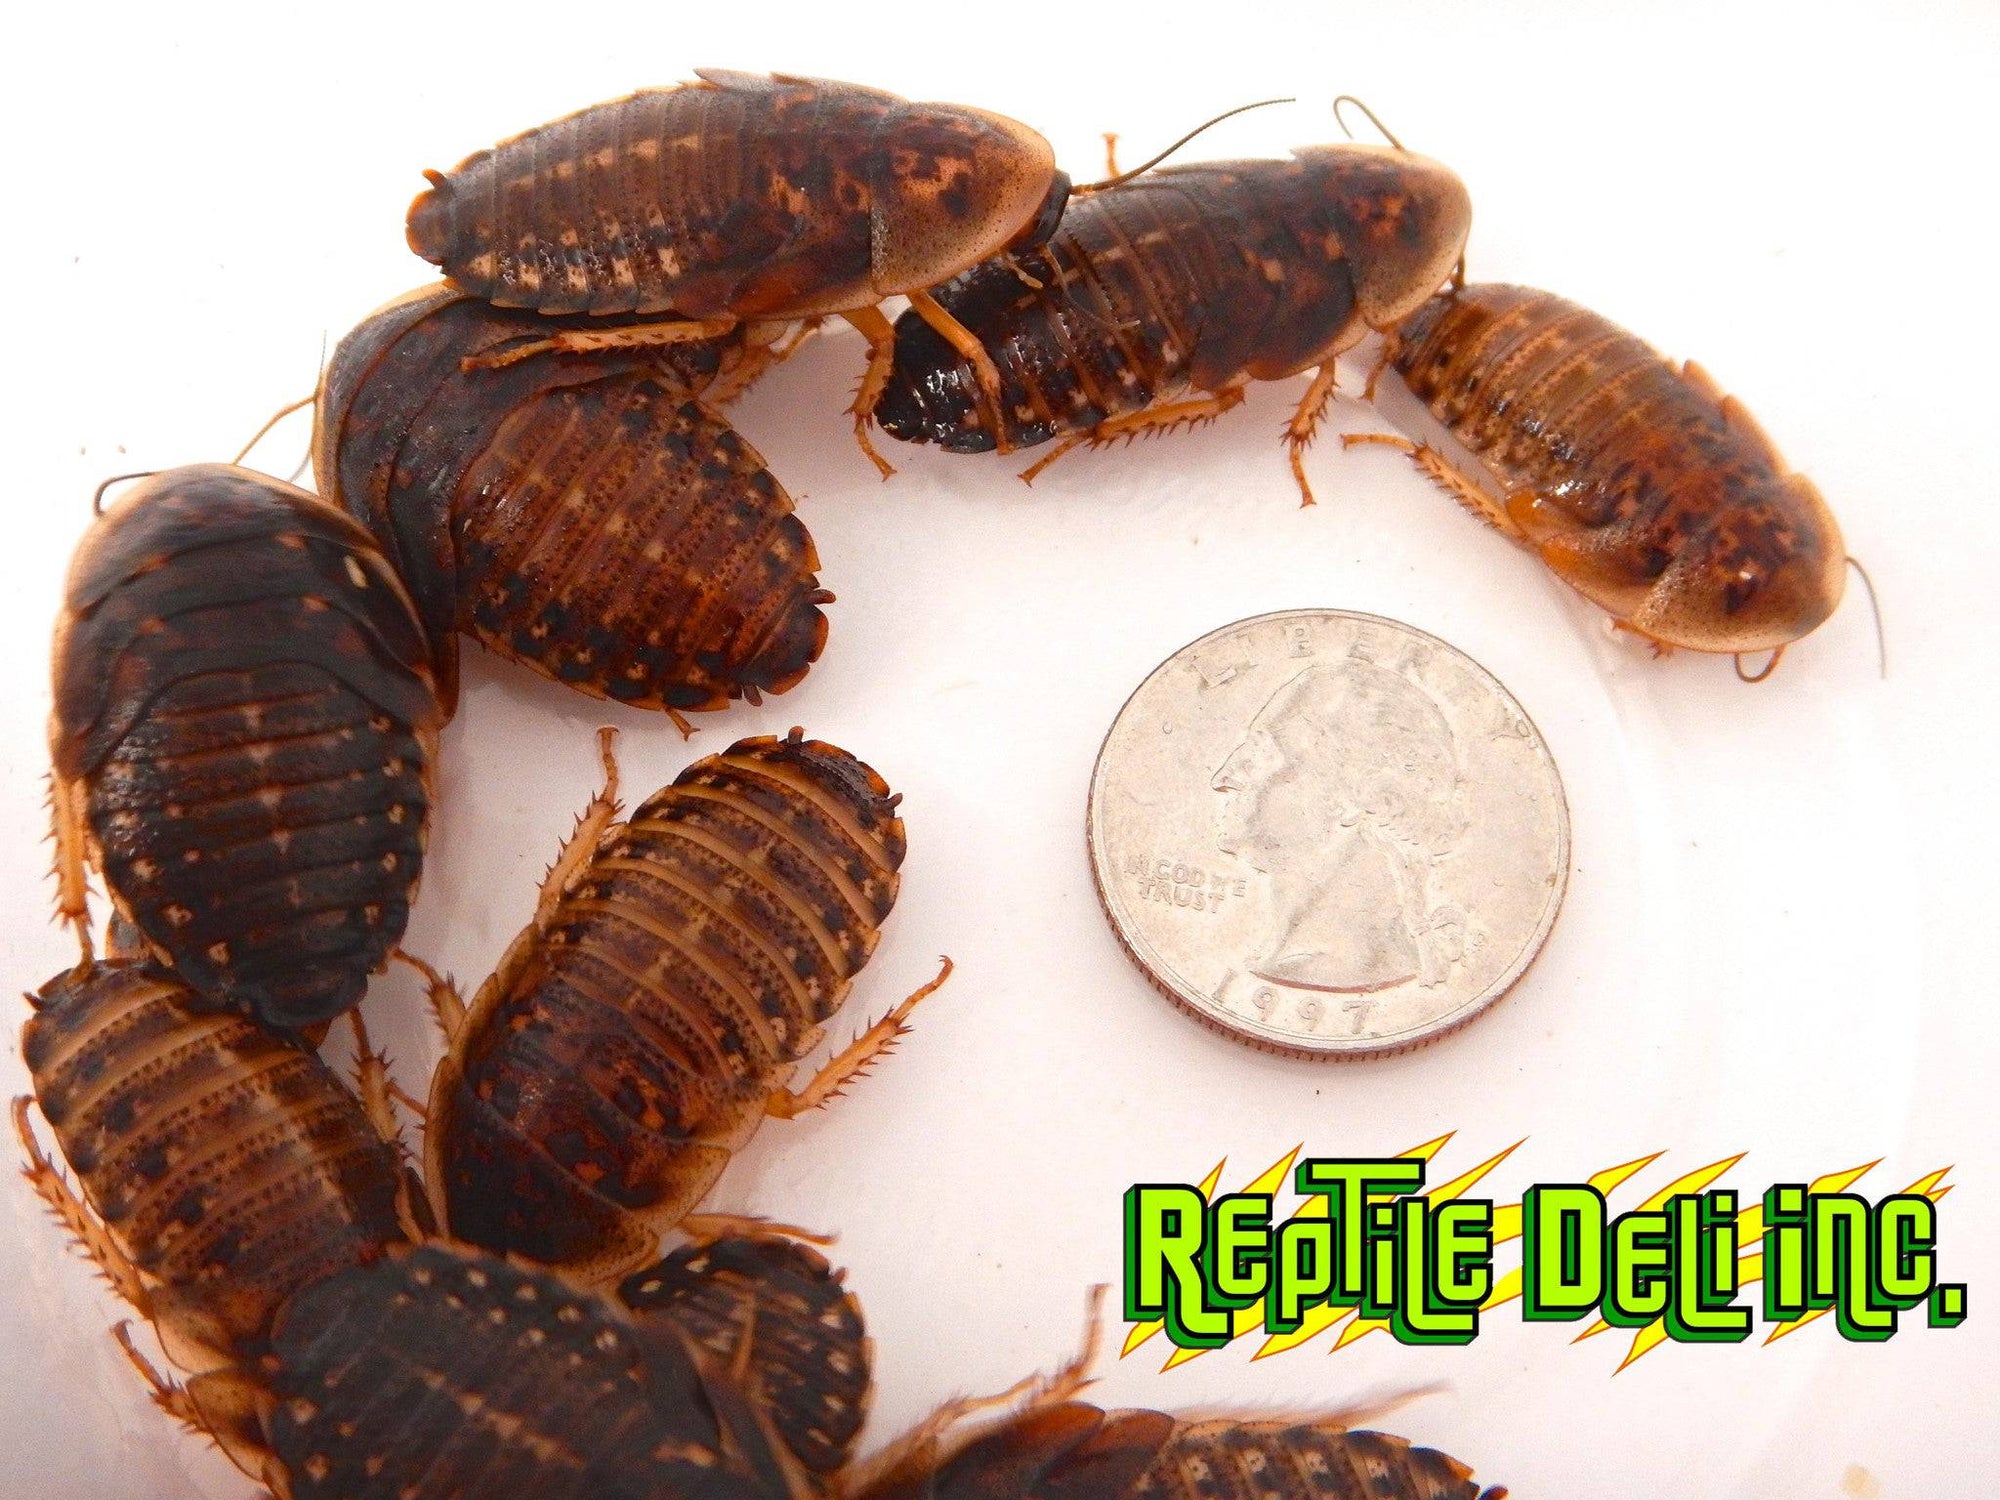 Dubia Roach - XL - Bulk - Reptile Deli Inc.